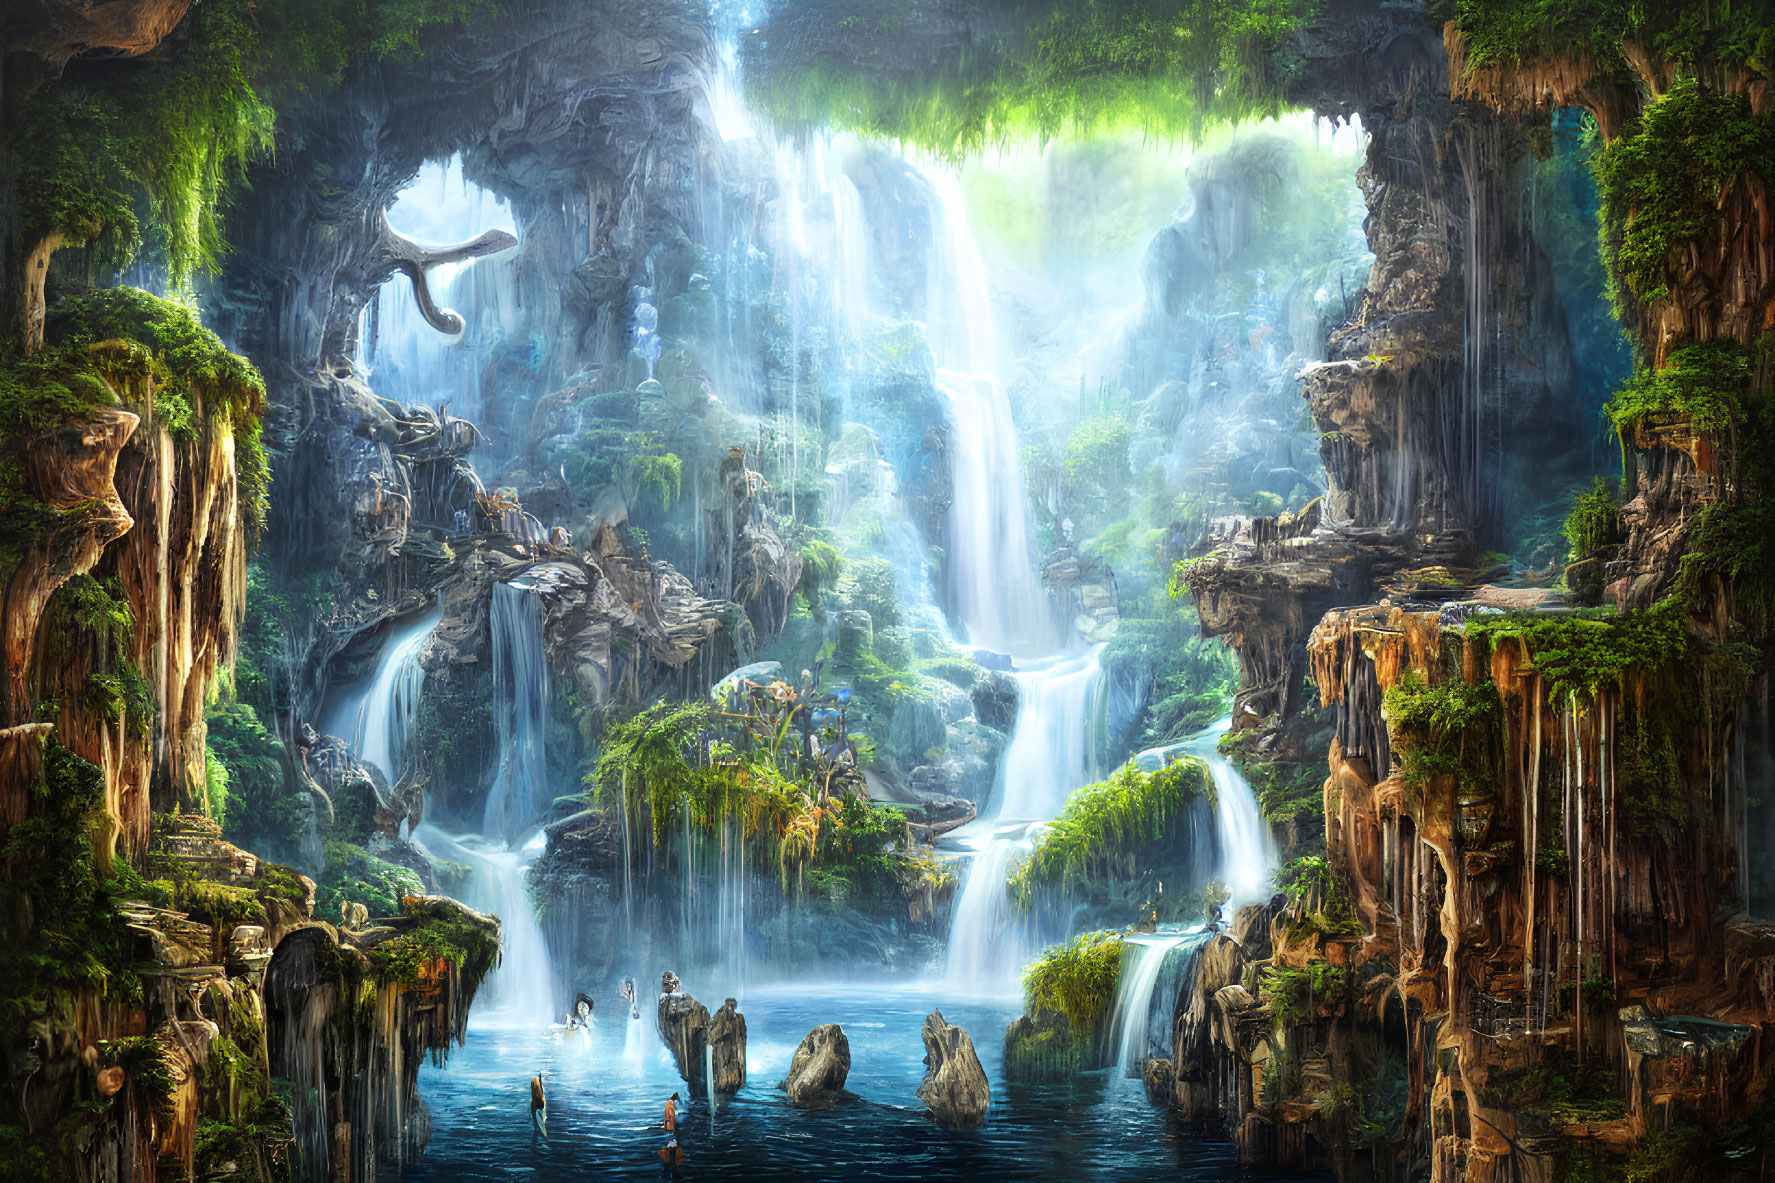 Mystical Waterfall Paradise Amid Lush Foliage